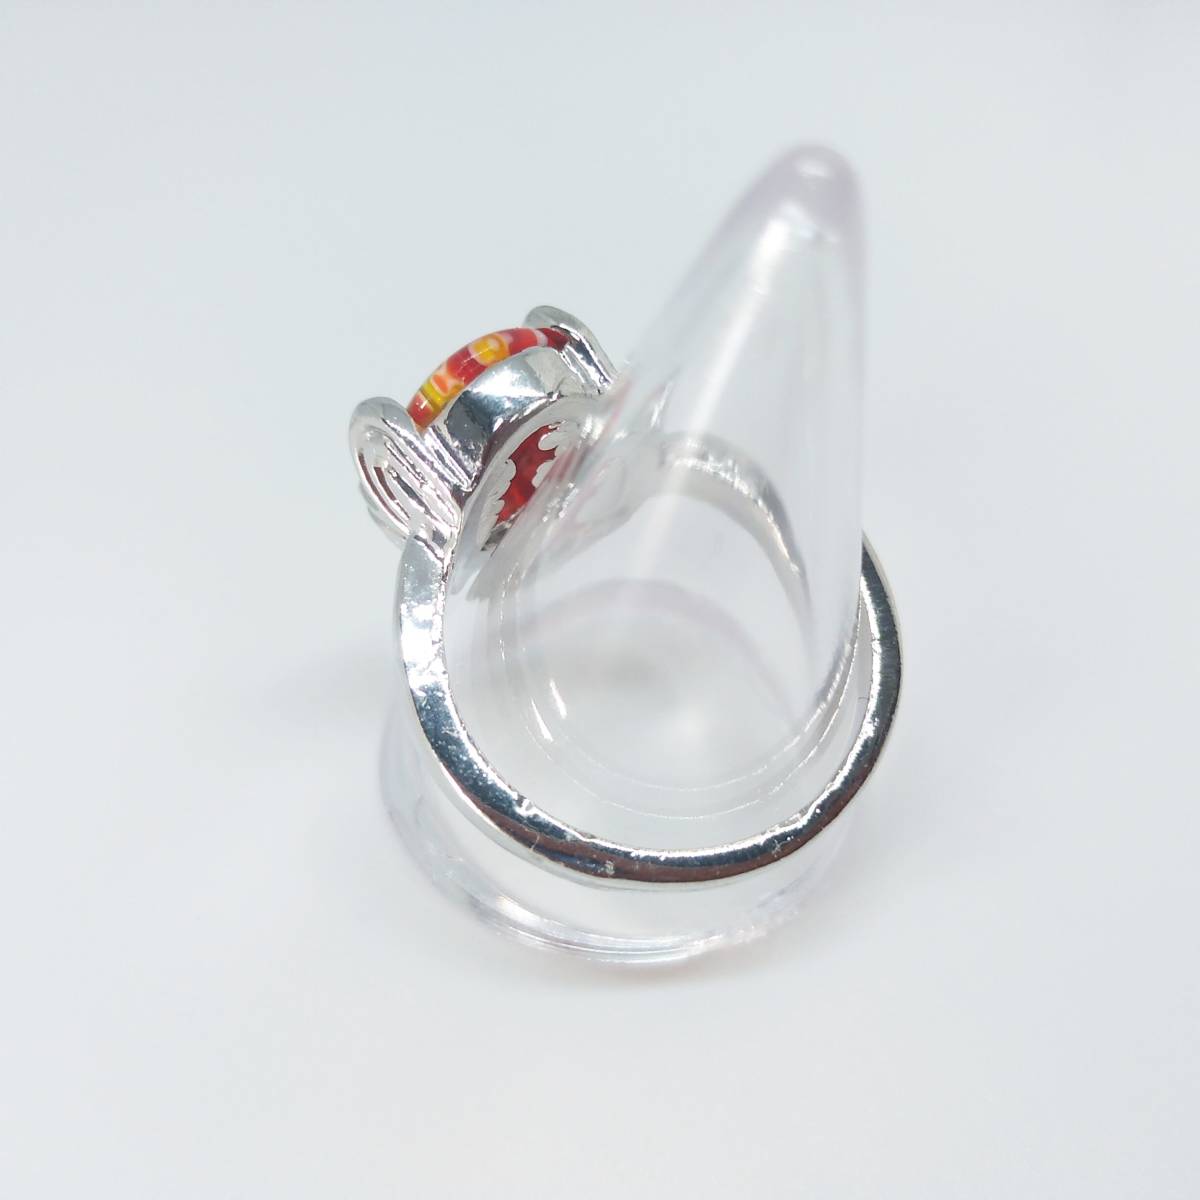 R21 指輪 リング レディース メンズ ラインストーン アクセサリー ファッション 小物 装飾品 送料無料 